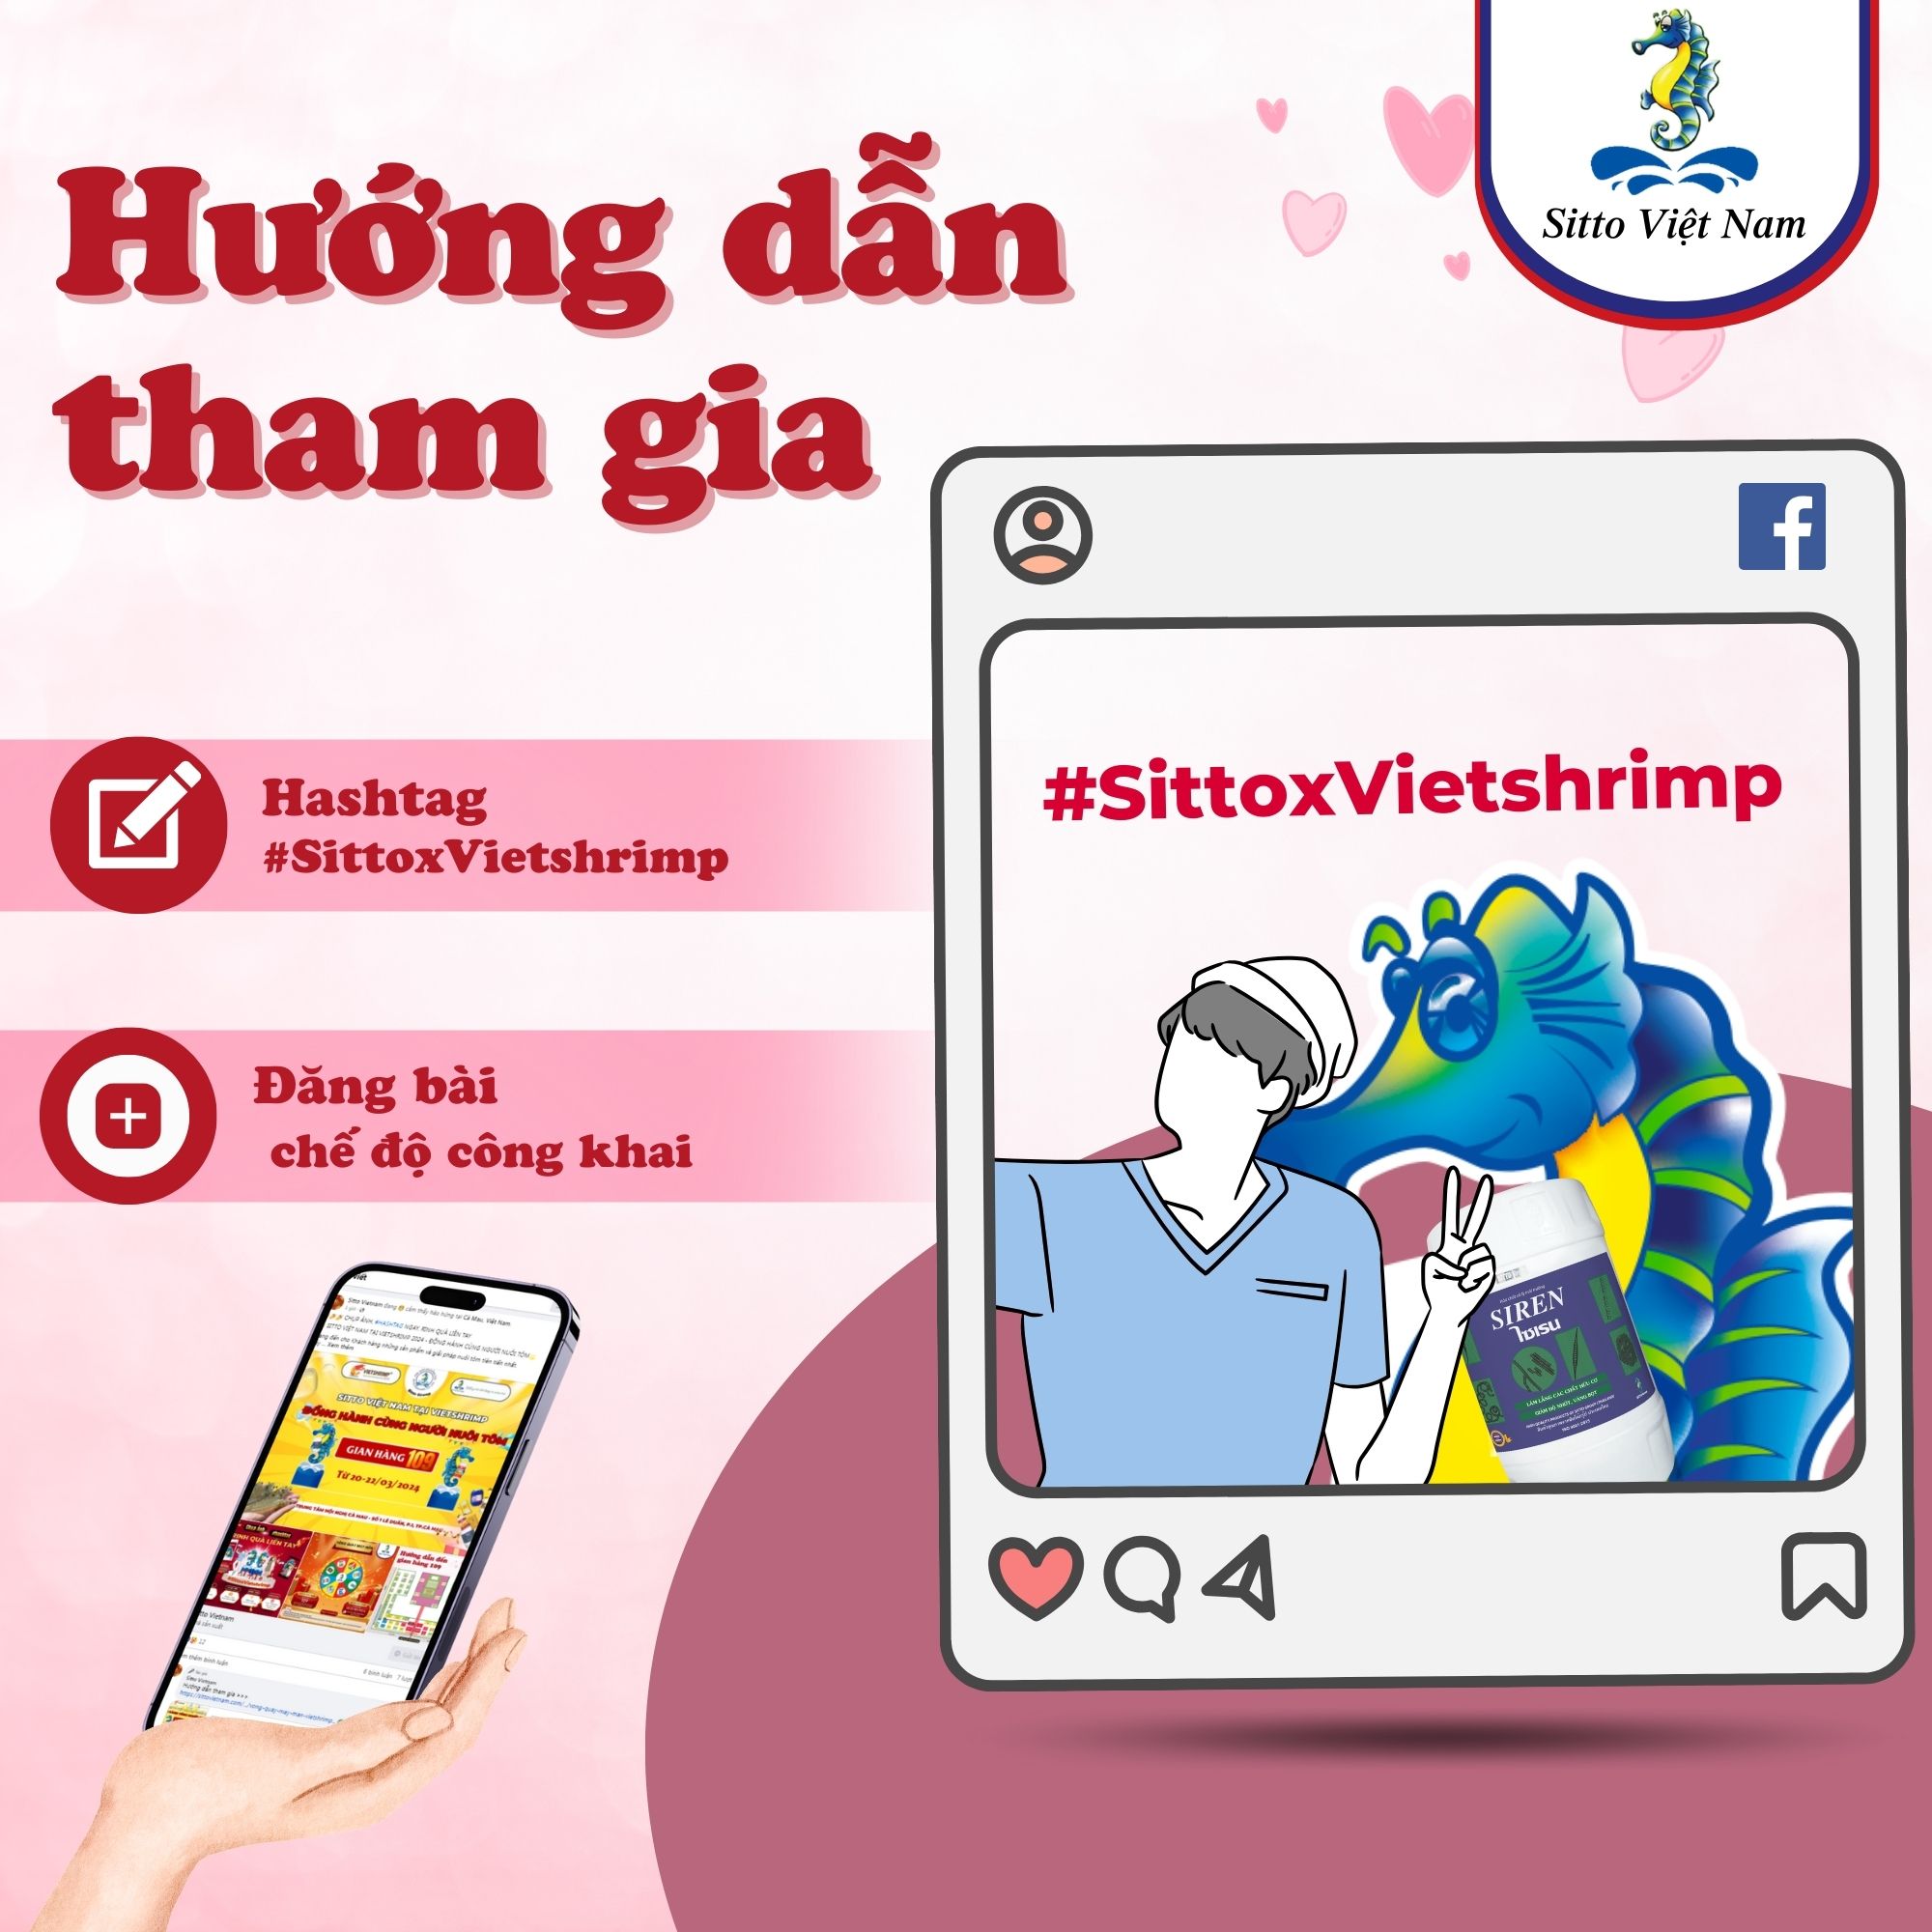 Chia sẻ facebook cá nhân + Hashtag #SittoxVietshrimp